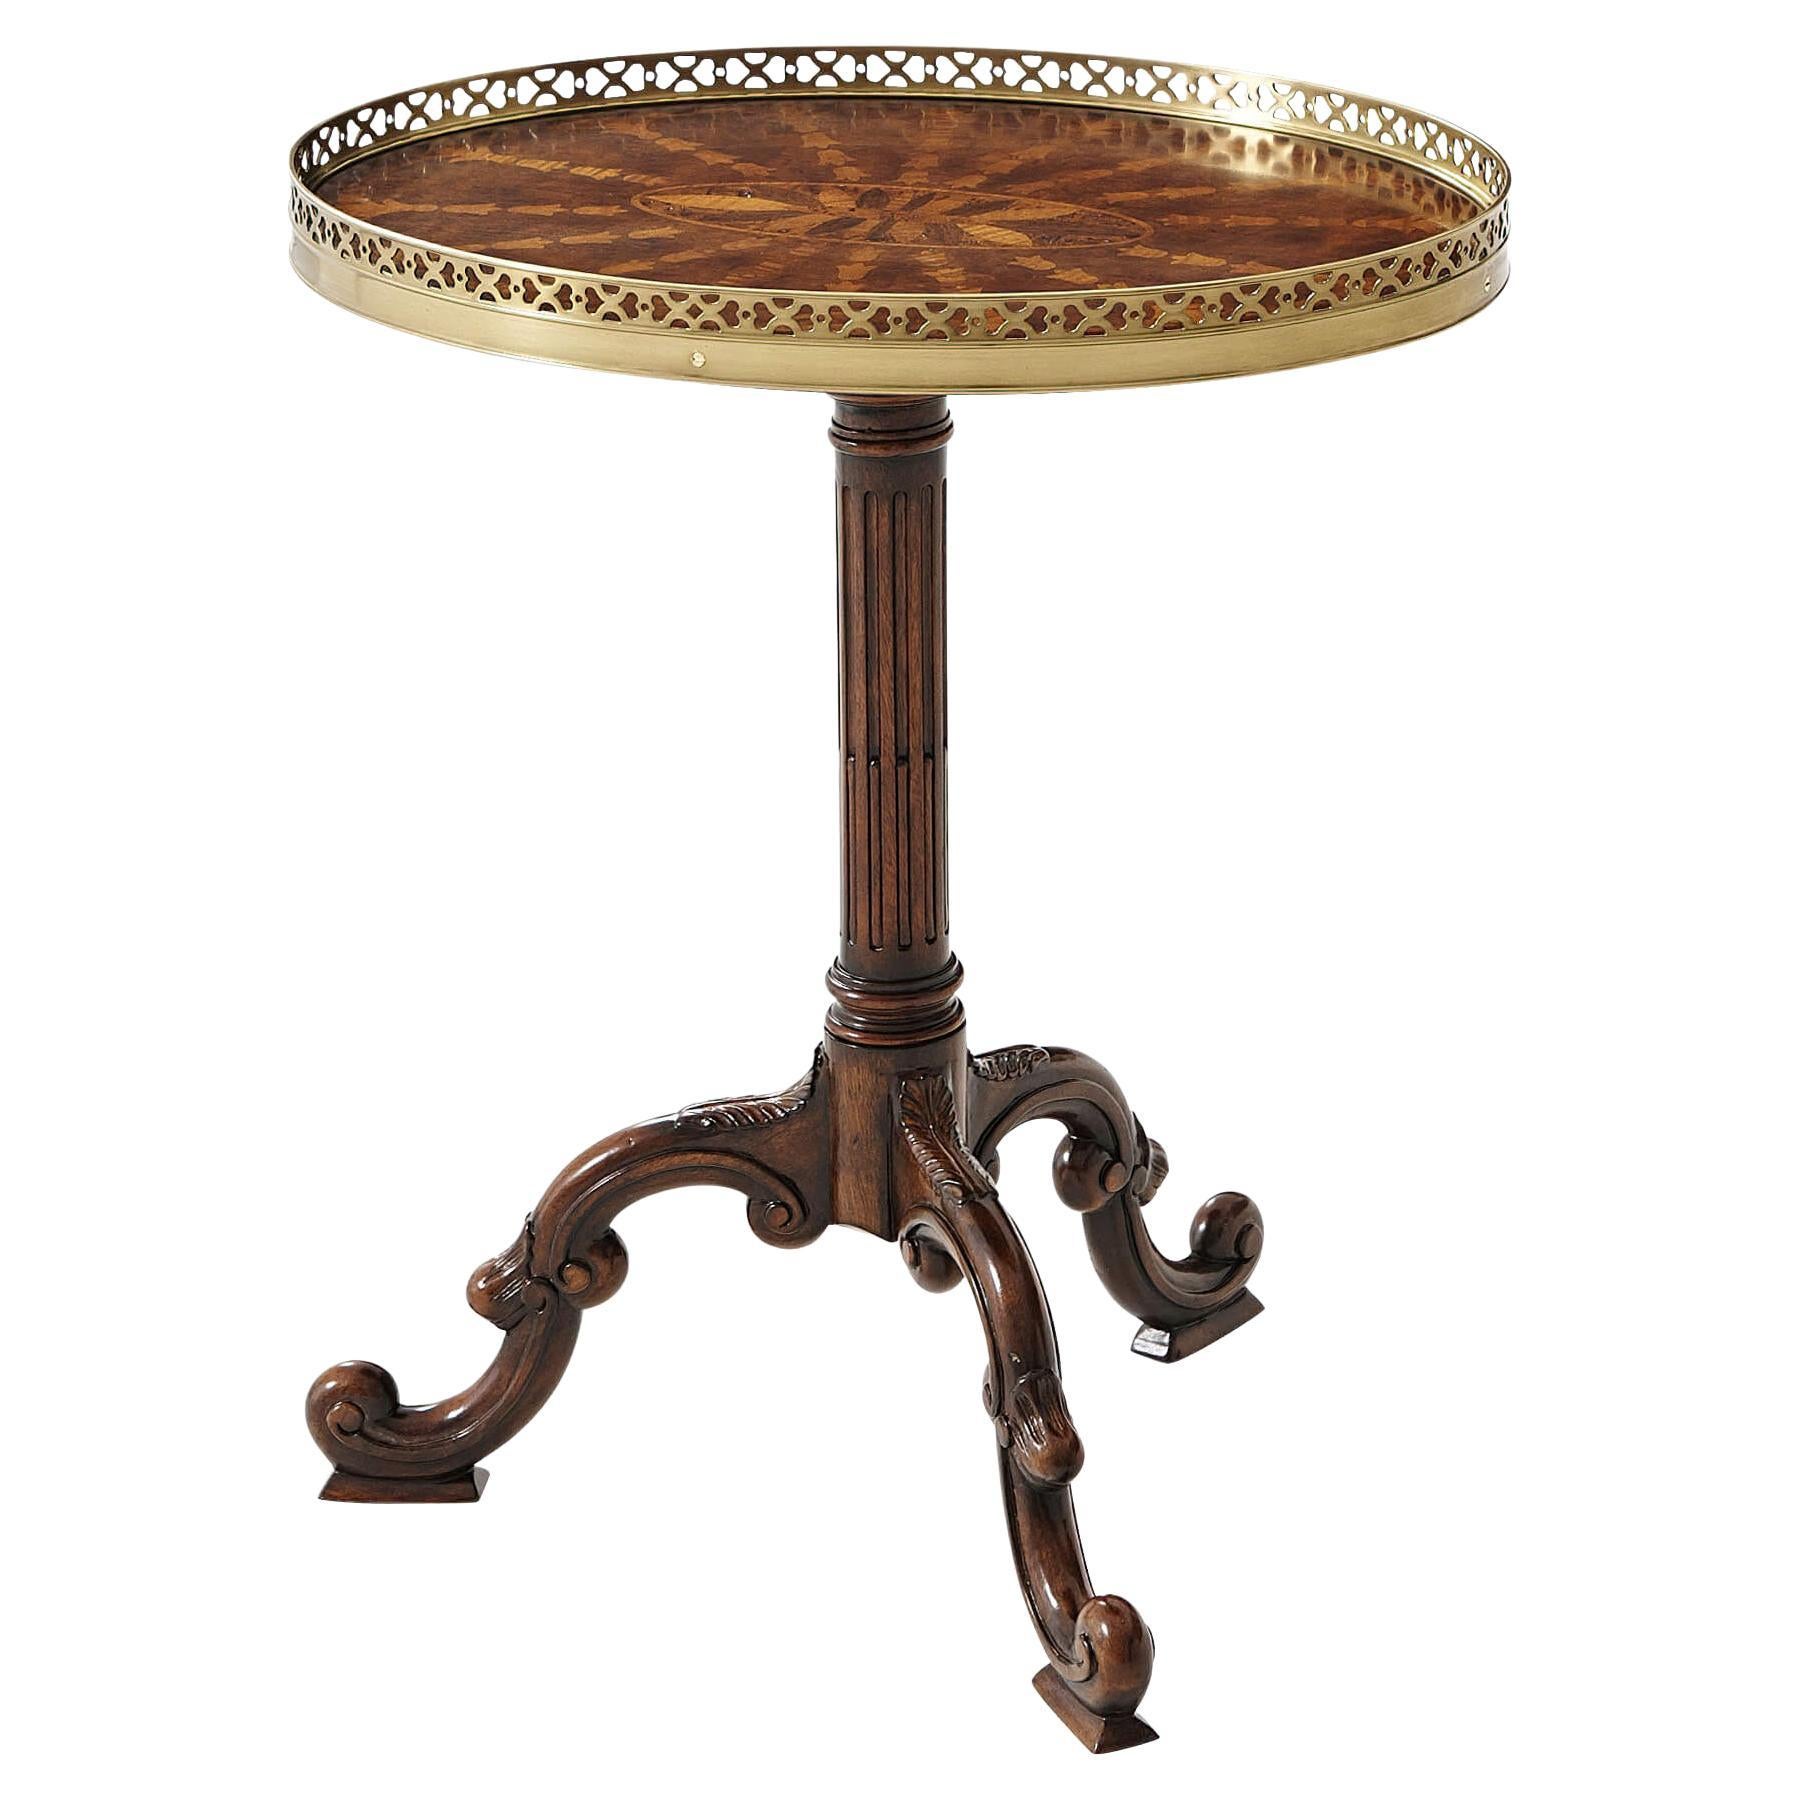 Table d'appoint ovale en parqueterie de style George III